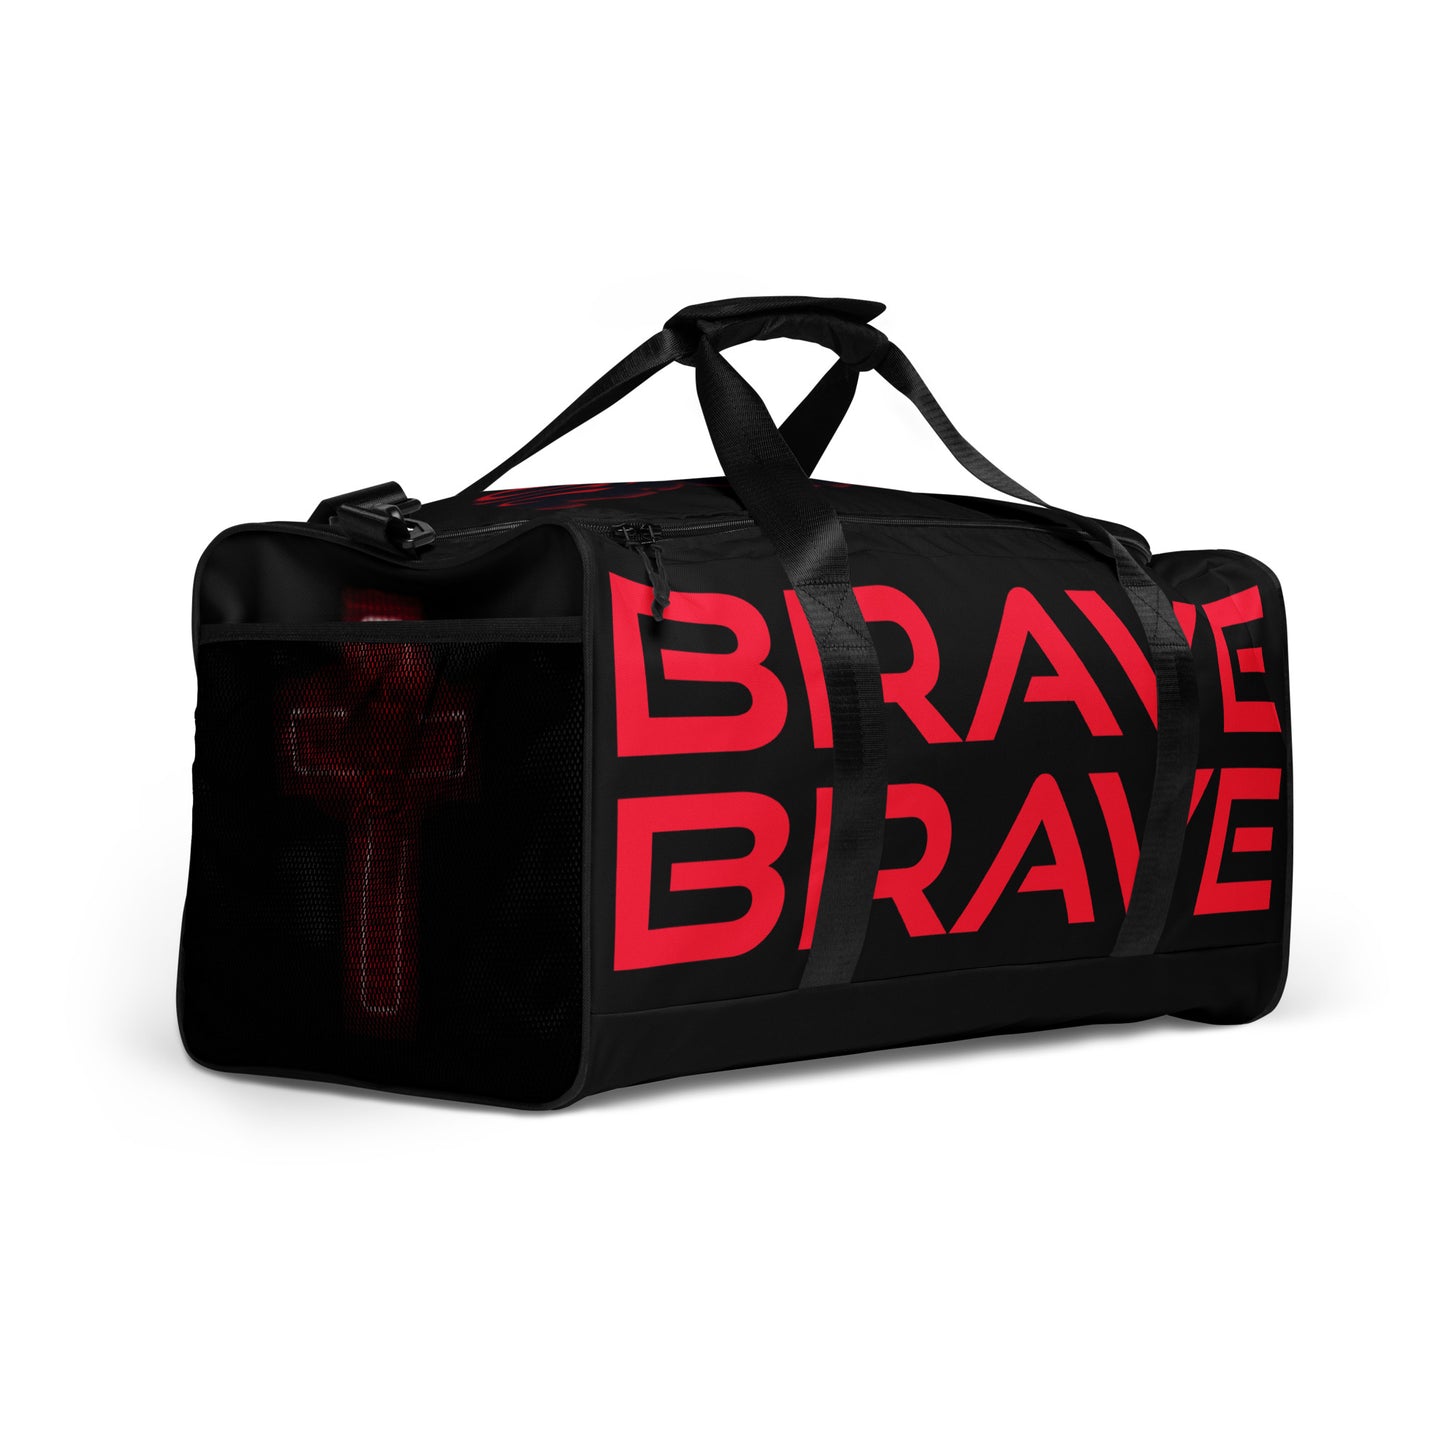 Brave- Duffle bag